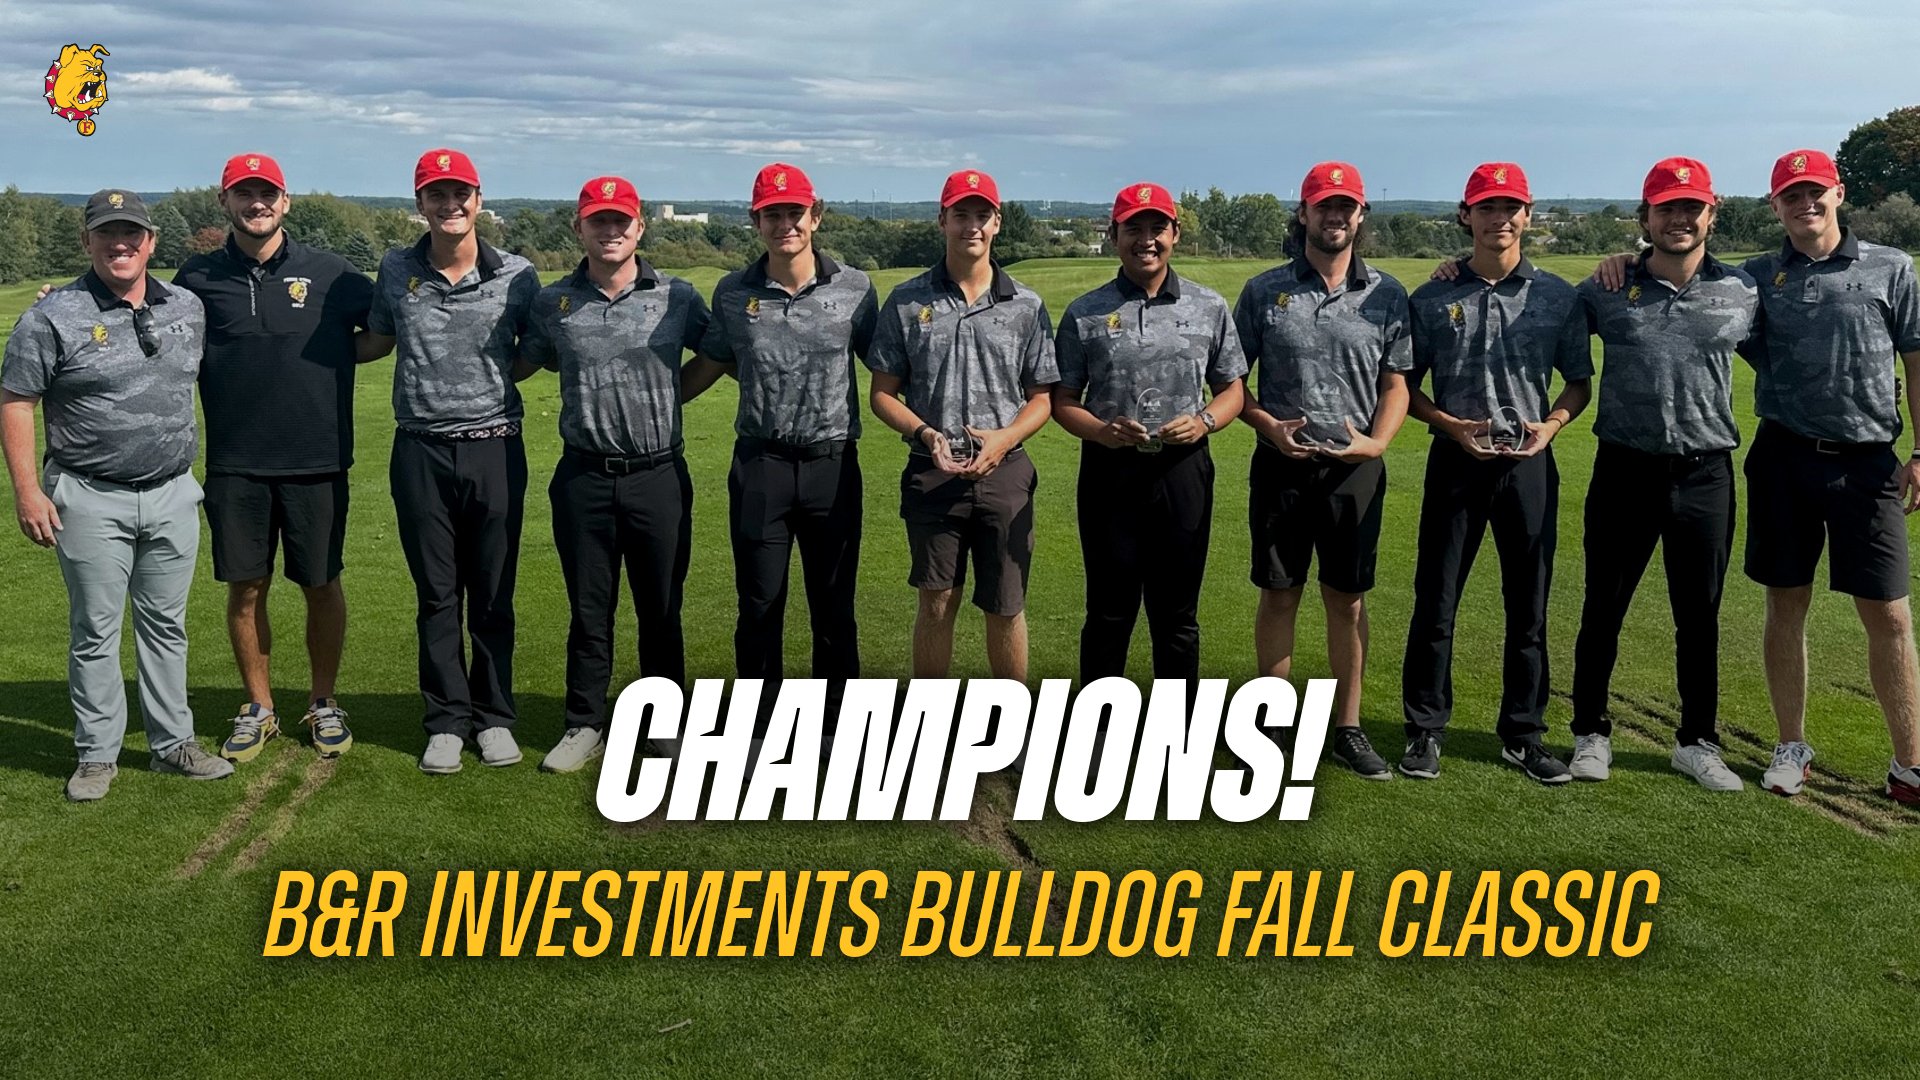 Ferris State Men's Golf Captures B&R Investments Bulldog Fall Classic Championship!